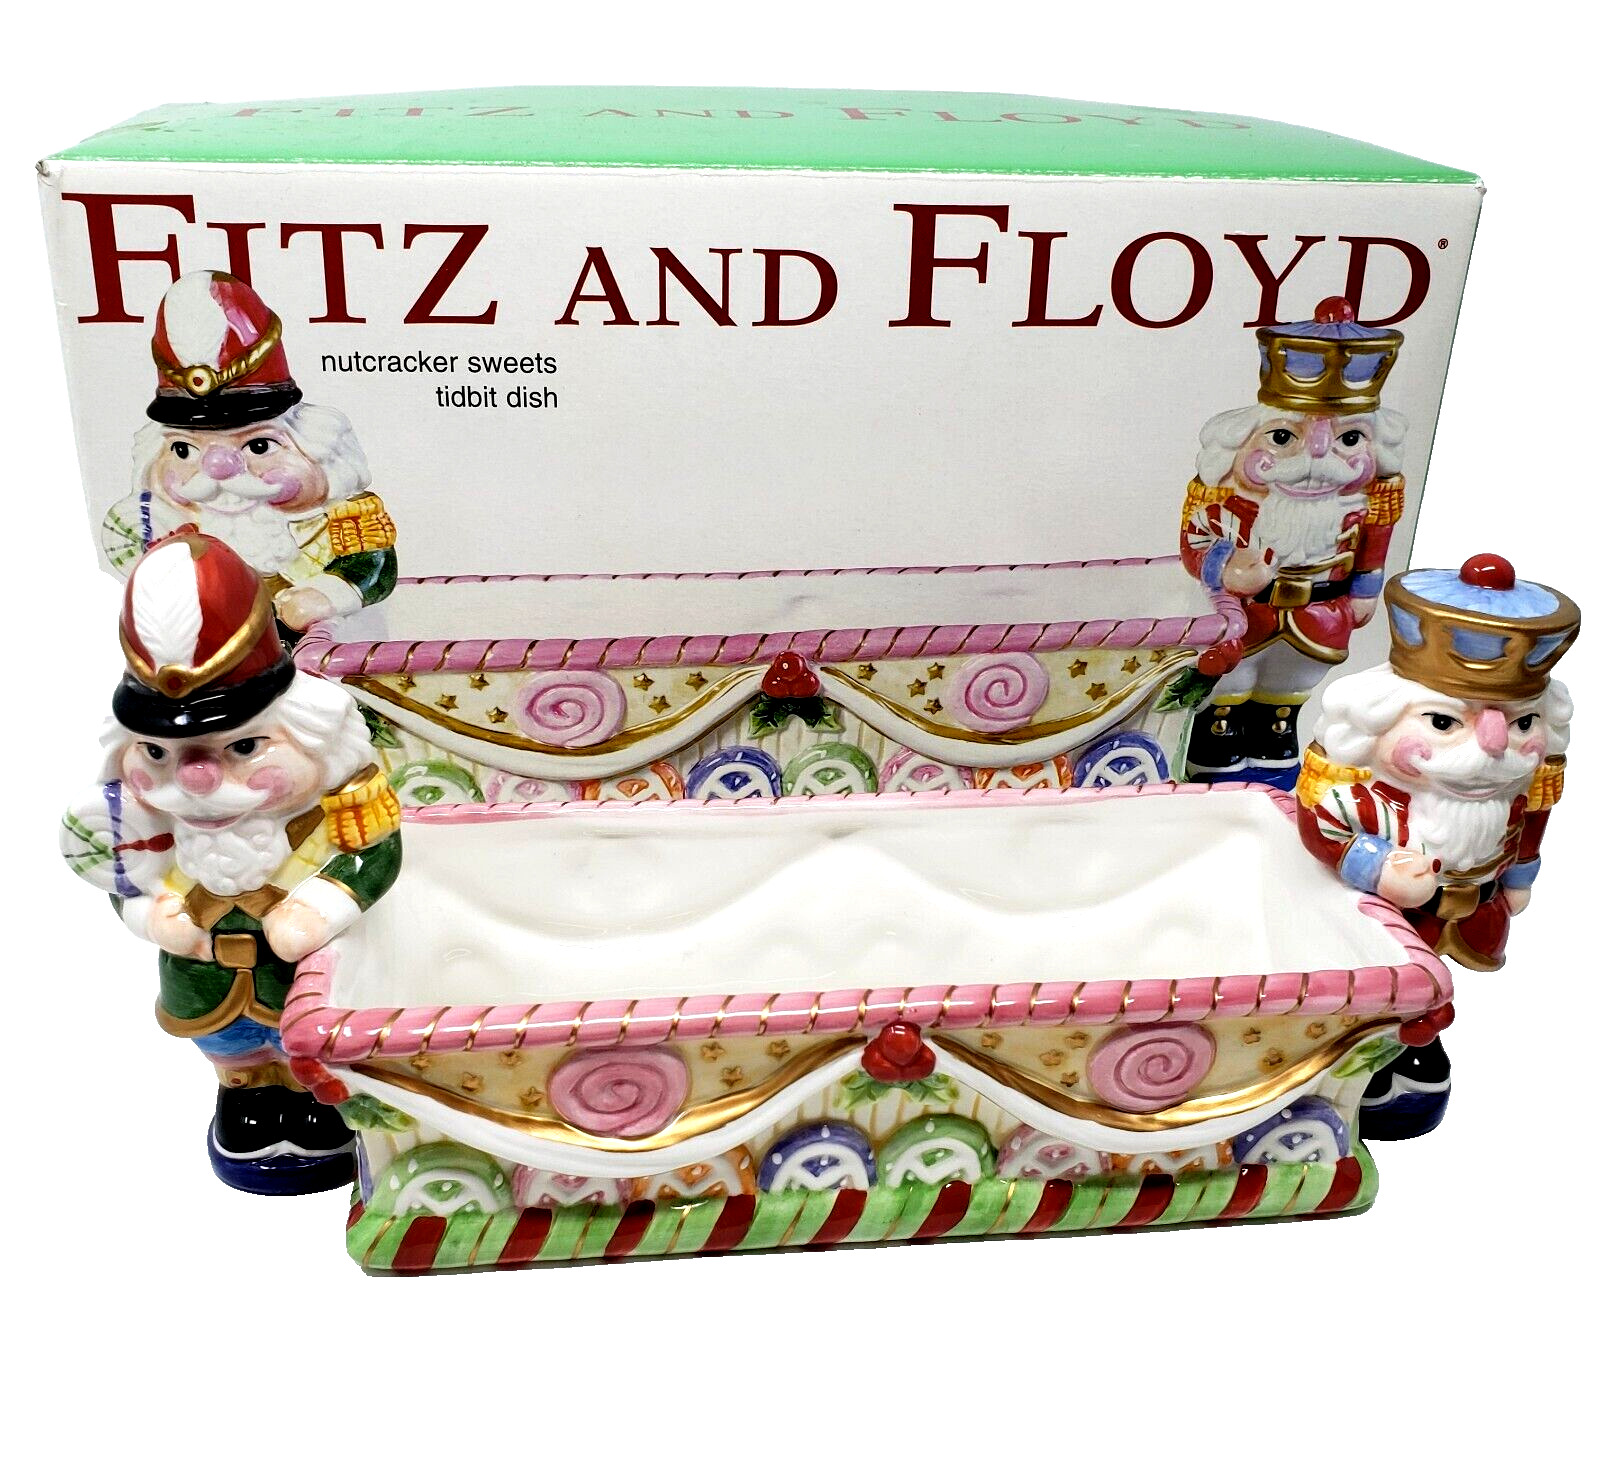 Fitz And Floyd Nutcracker Sweets Tidbit Dish 2003 Christmas Ceramic Original Box